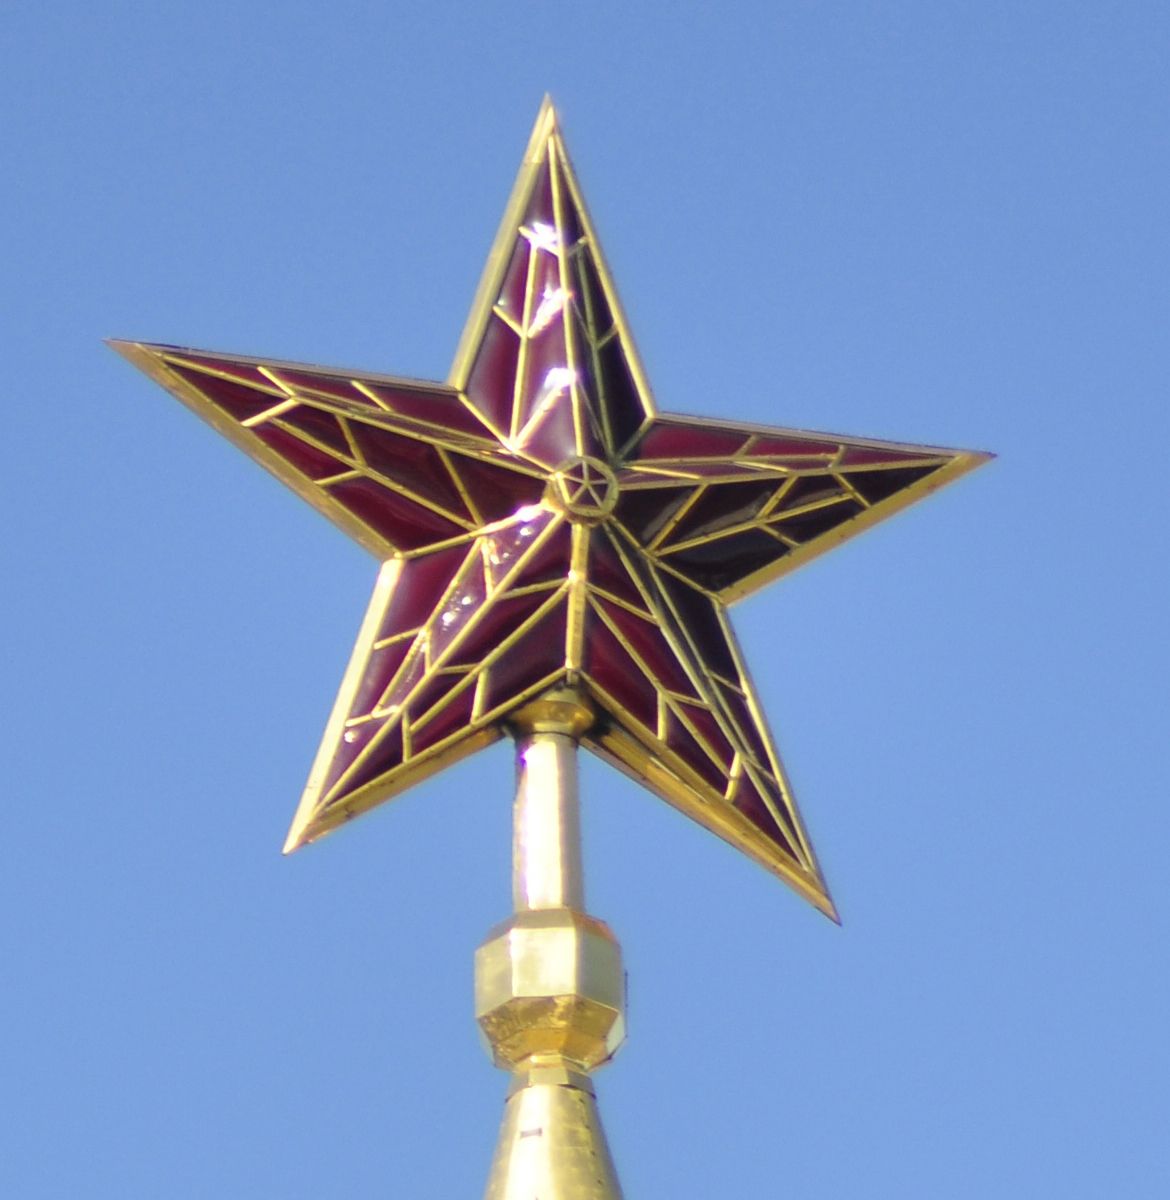 One of the Kremlin's red stars